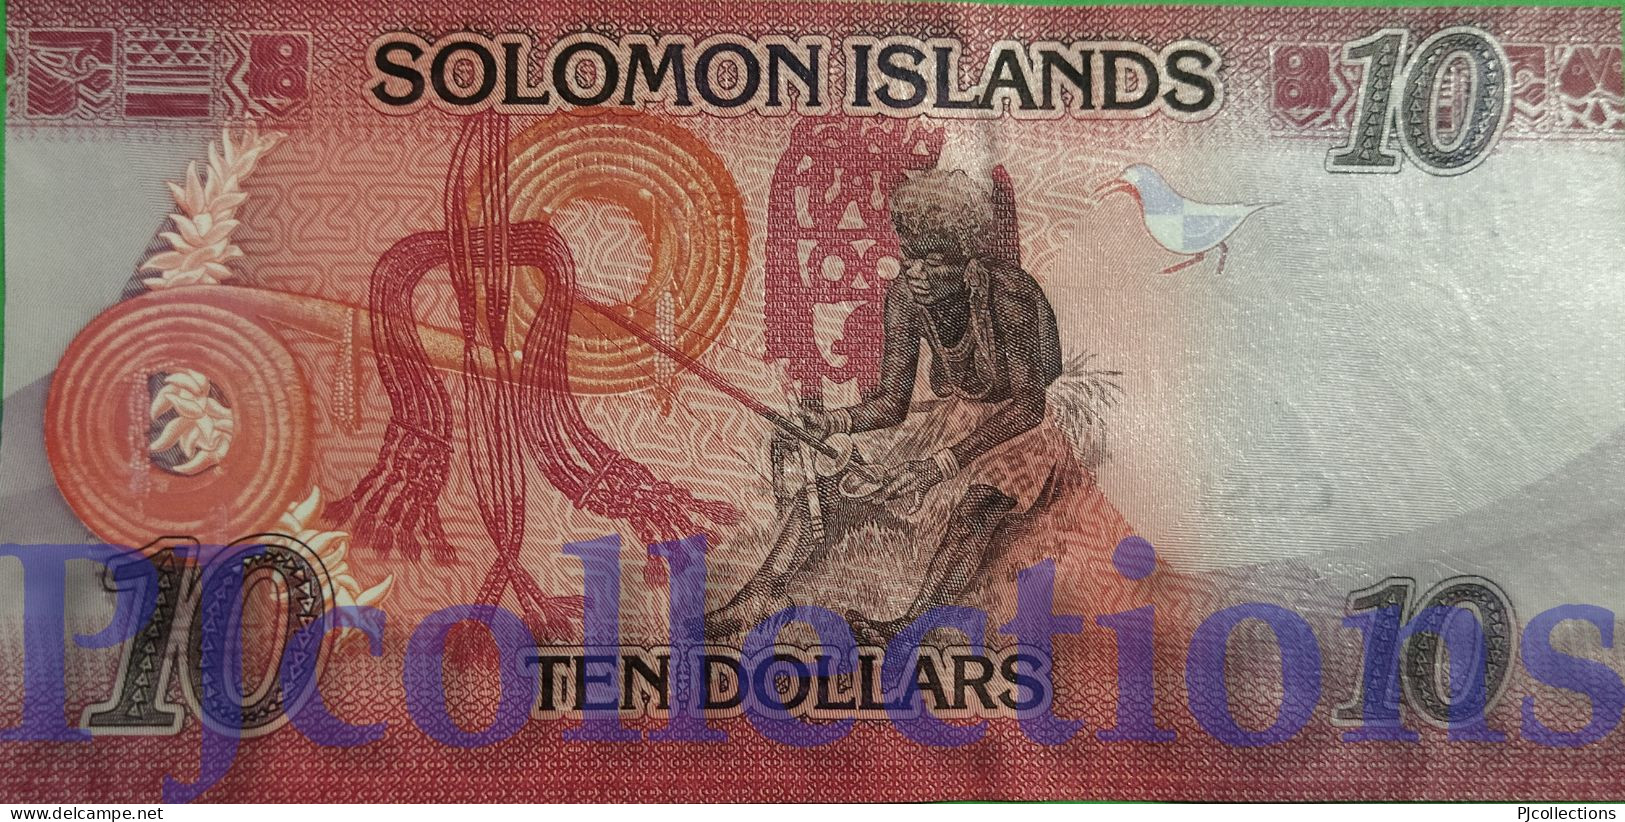 SOLOMON ISLANDS 10 DOLLARS 2017 PICK 33 UNC LOW SERIAL NUMBER "A/1 0048**" - Salomons